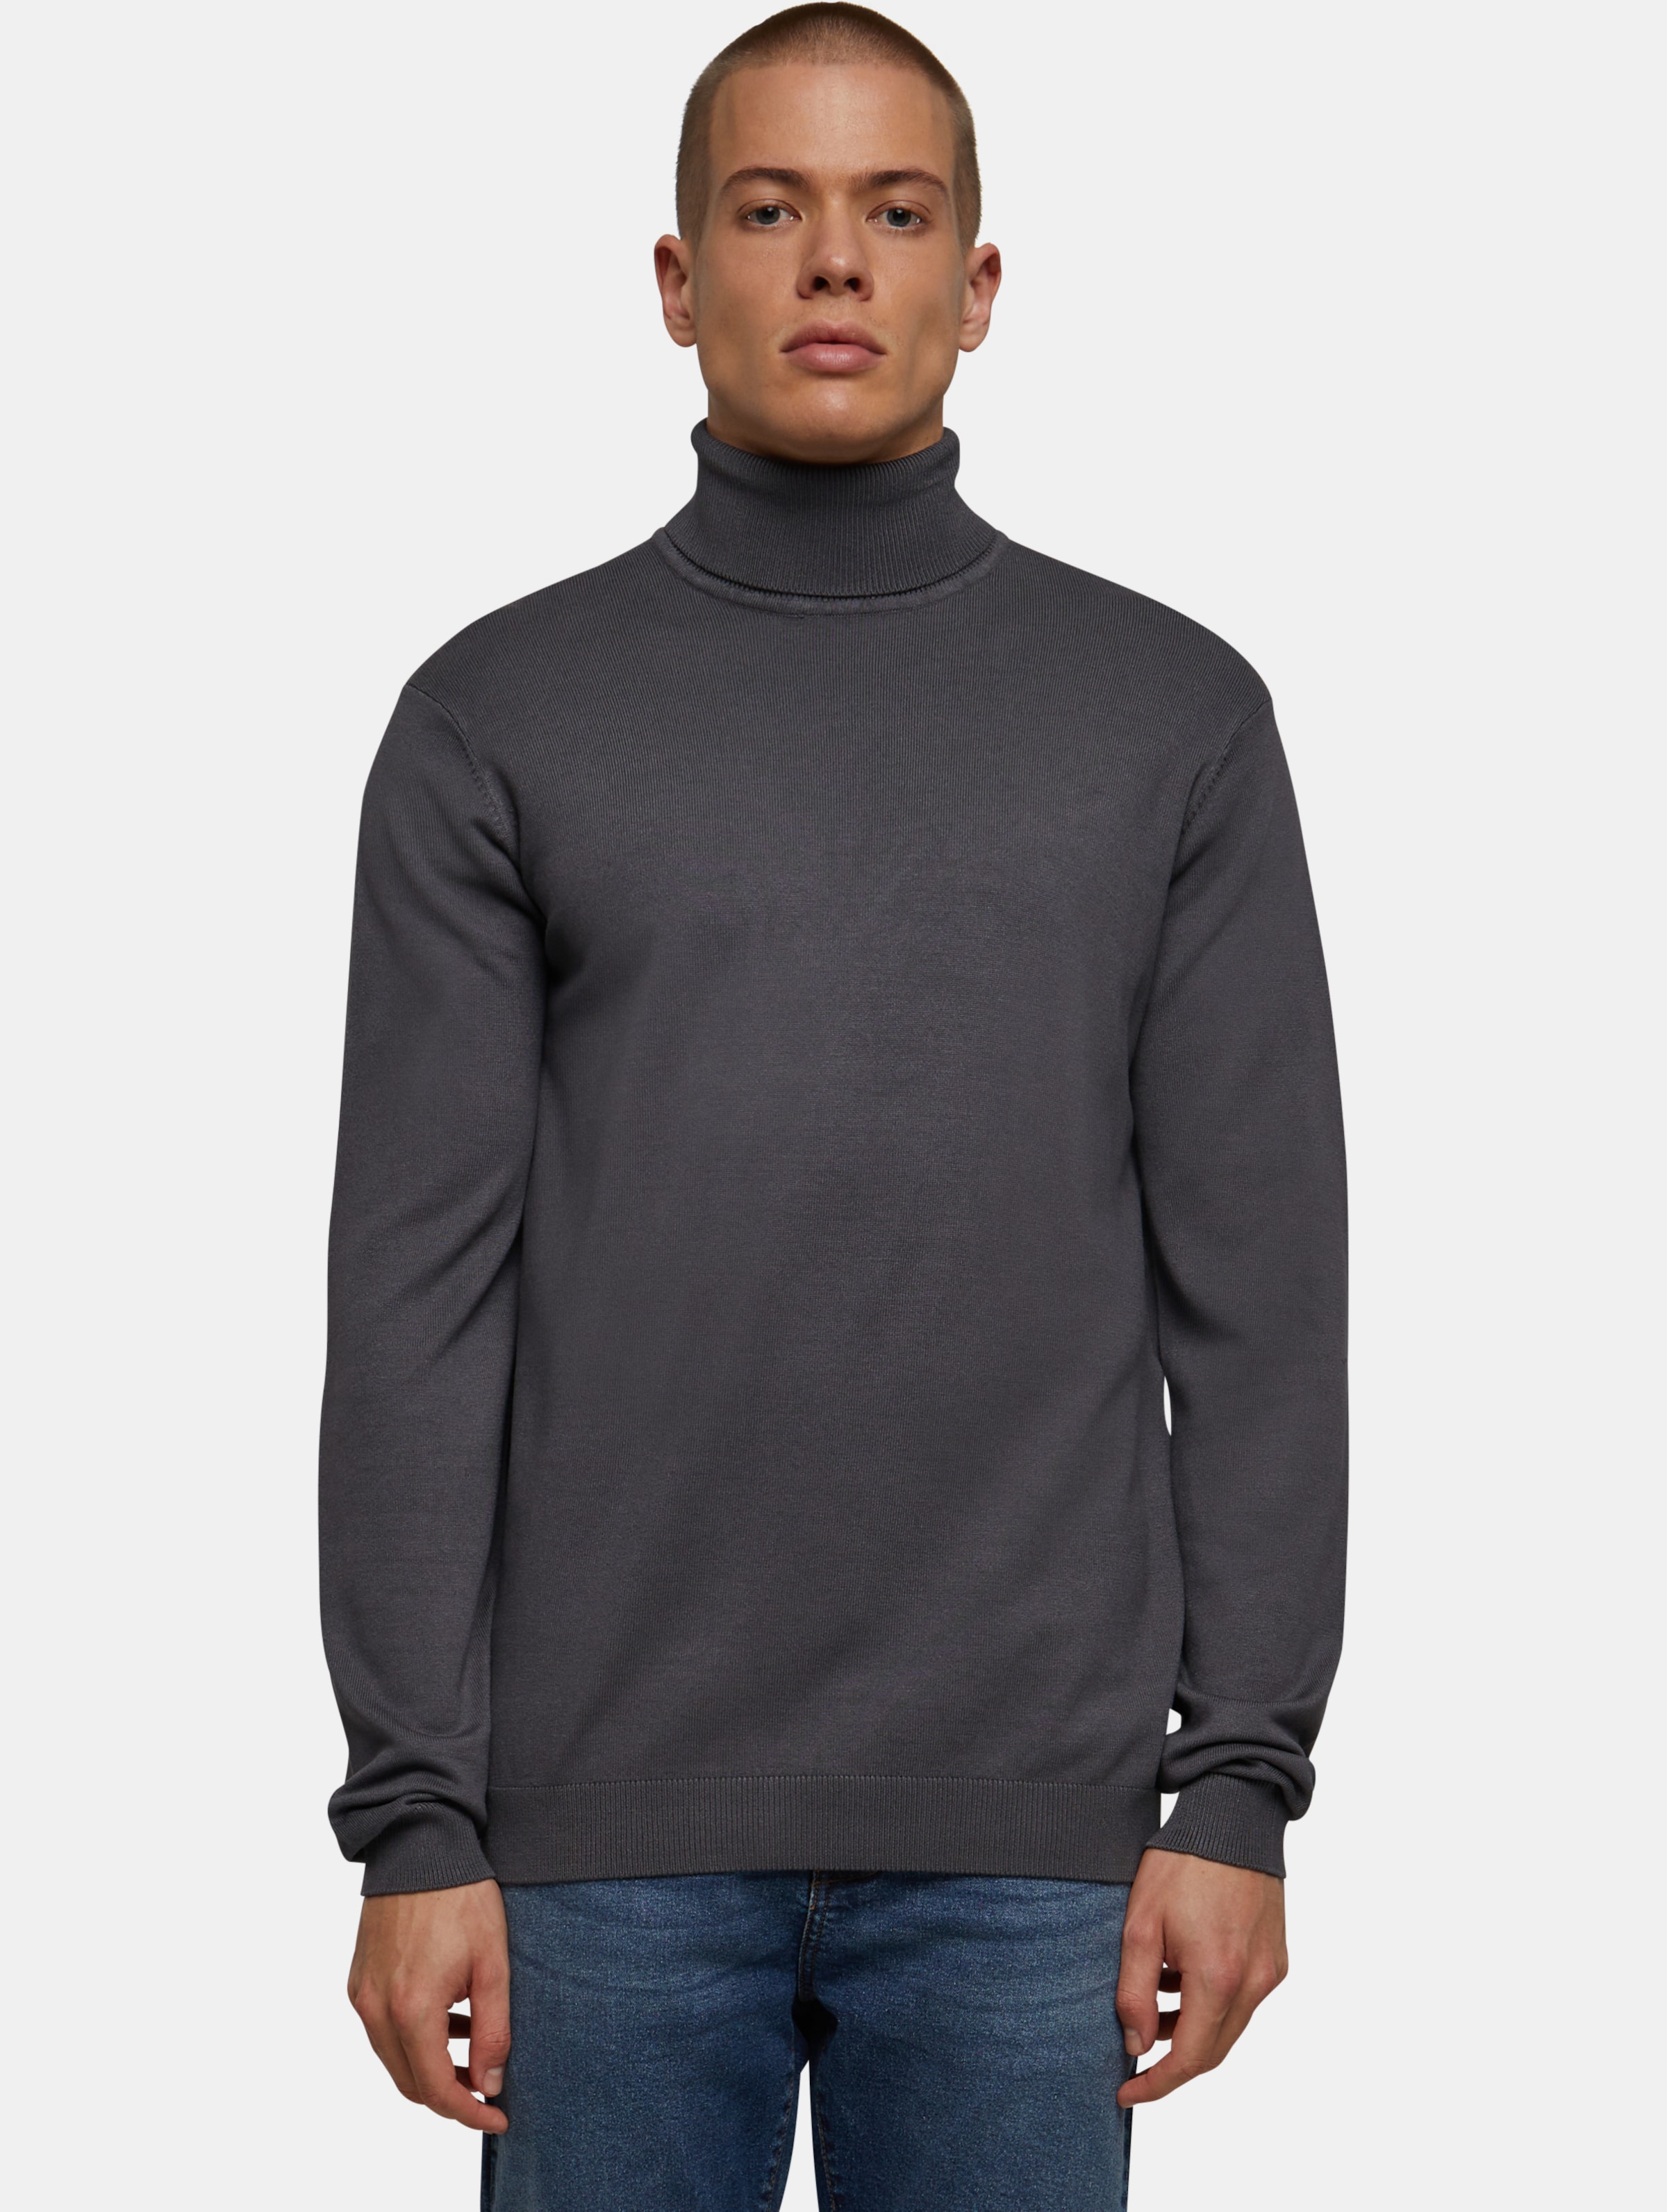 Urban Classics - Knitted Turtleneck Sweater - 4XL - Grijs